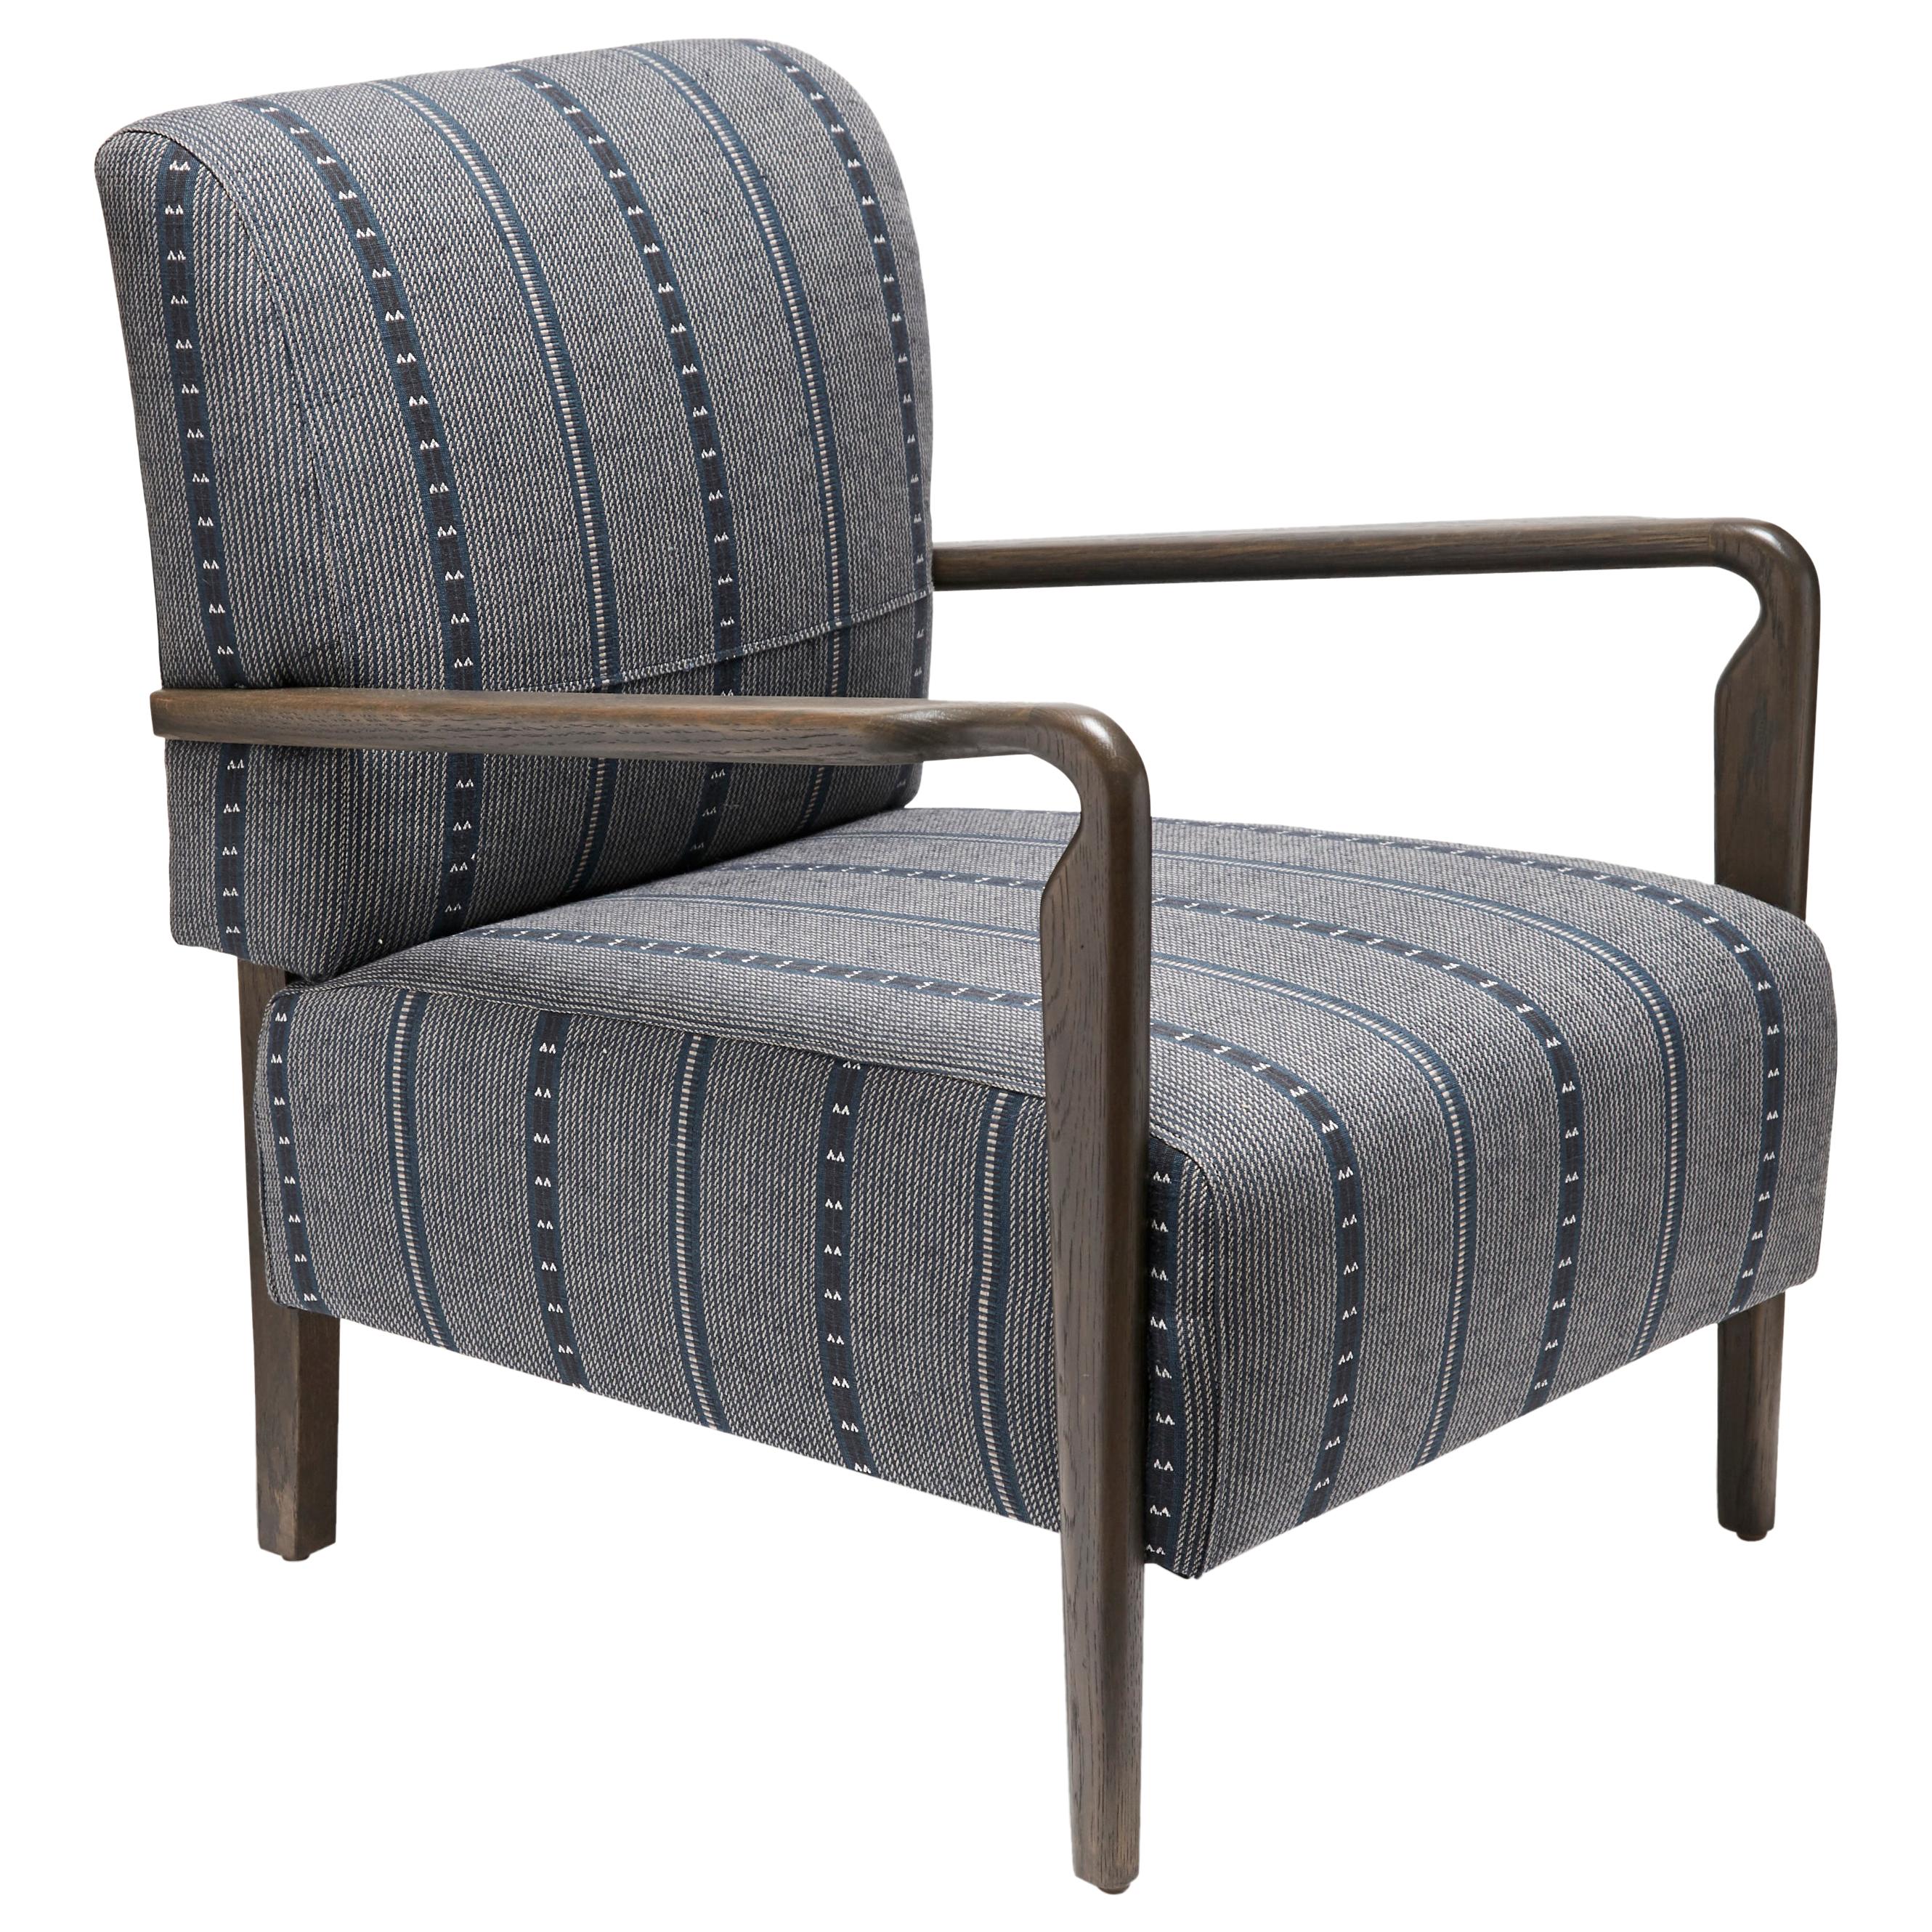 The Niguel Chair by Lawson-Fenning